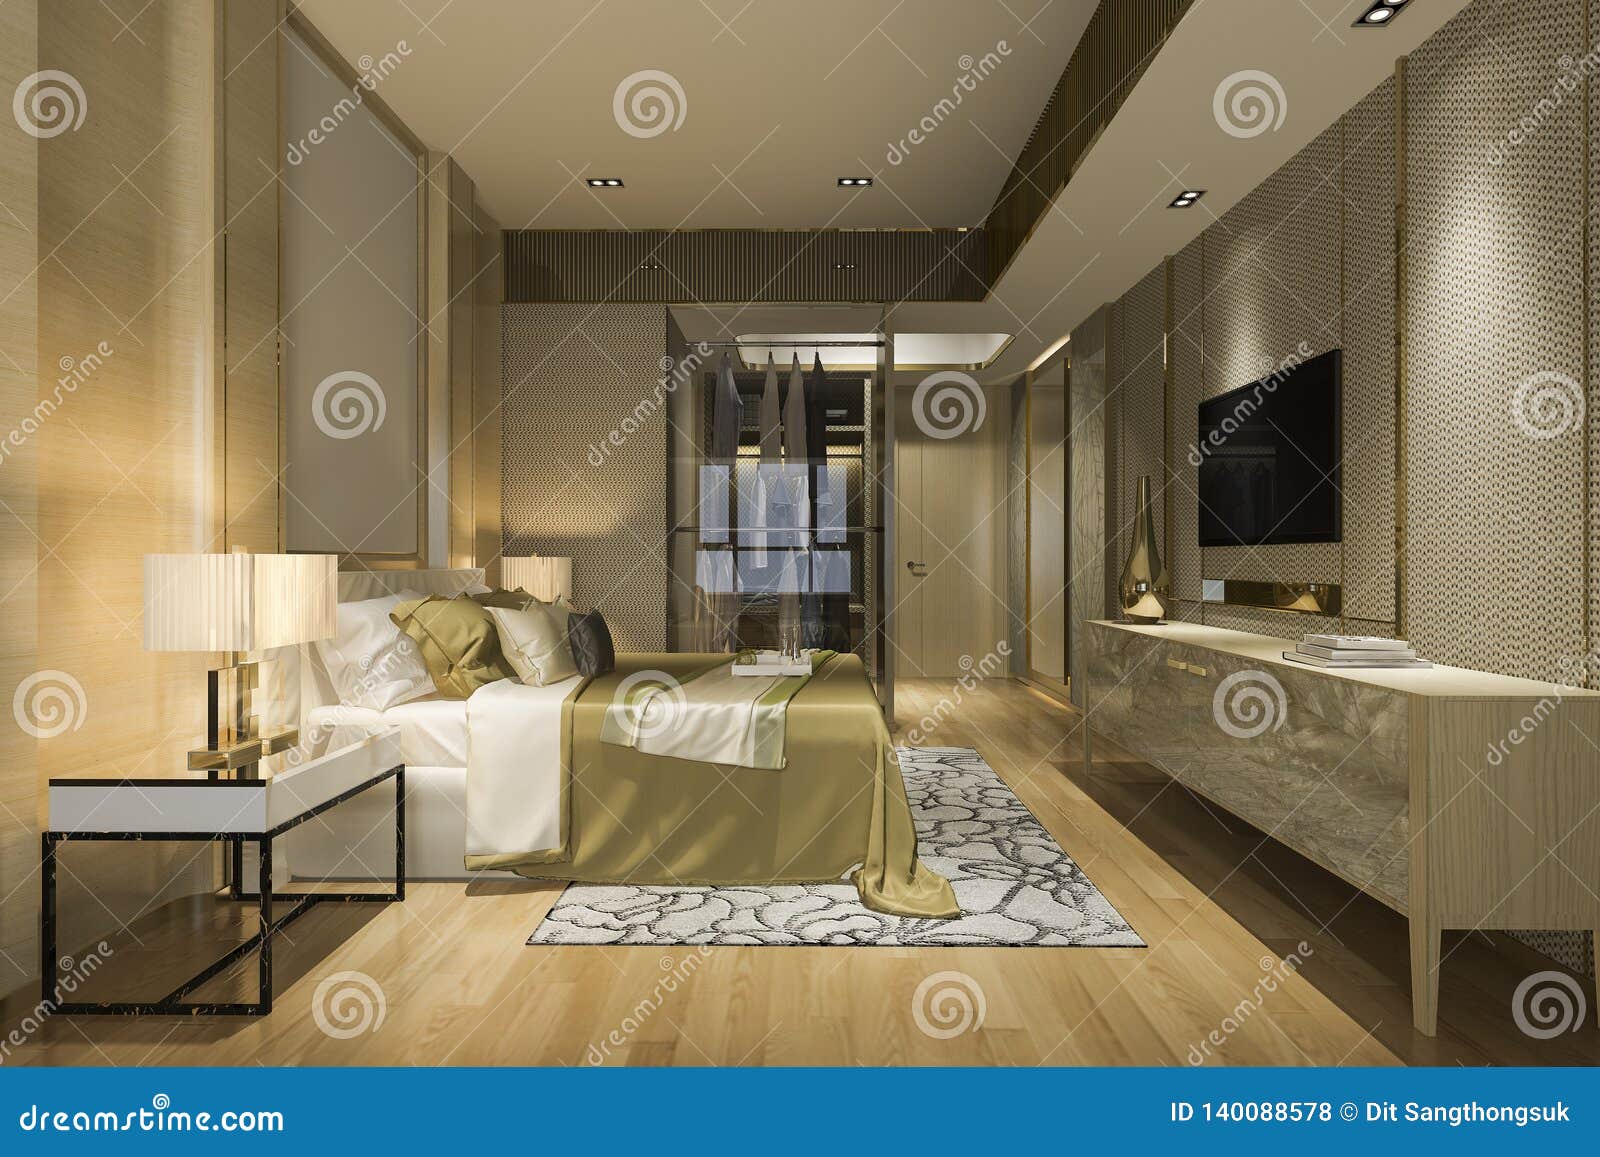 3d Rendering Luxury Modern Bedroom Suite In Hotel With